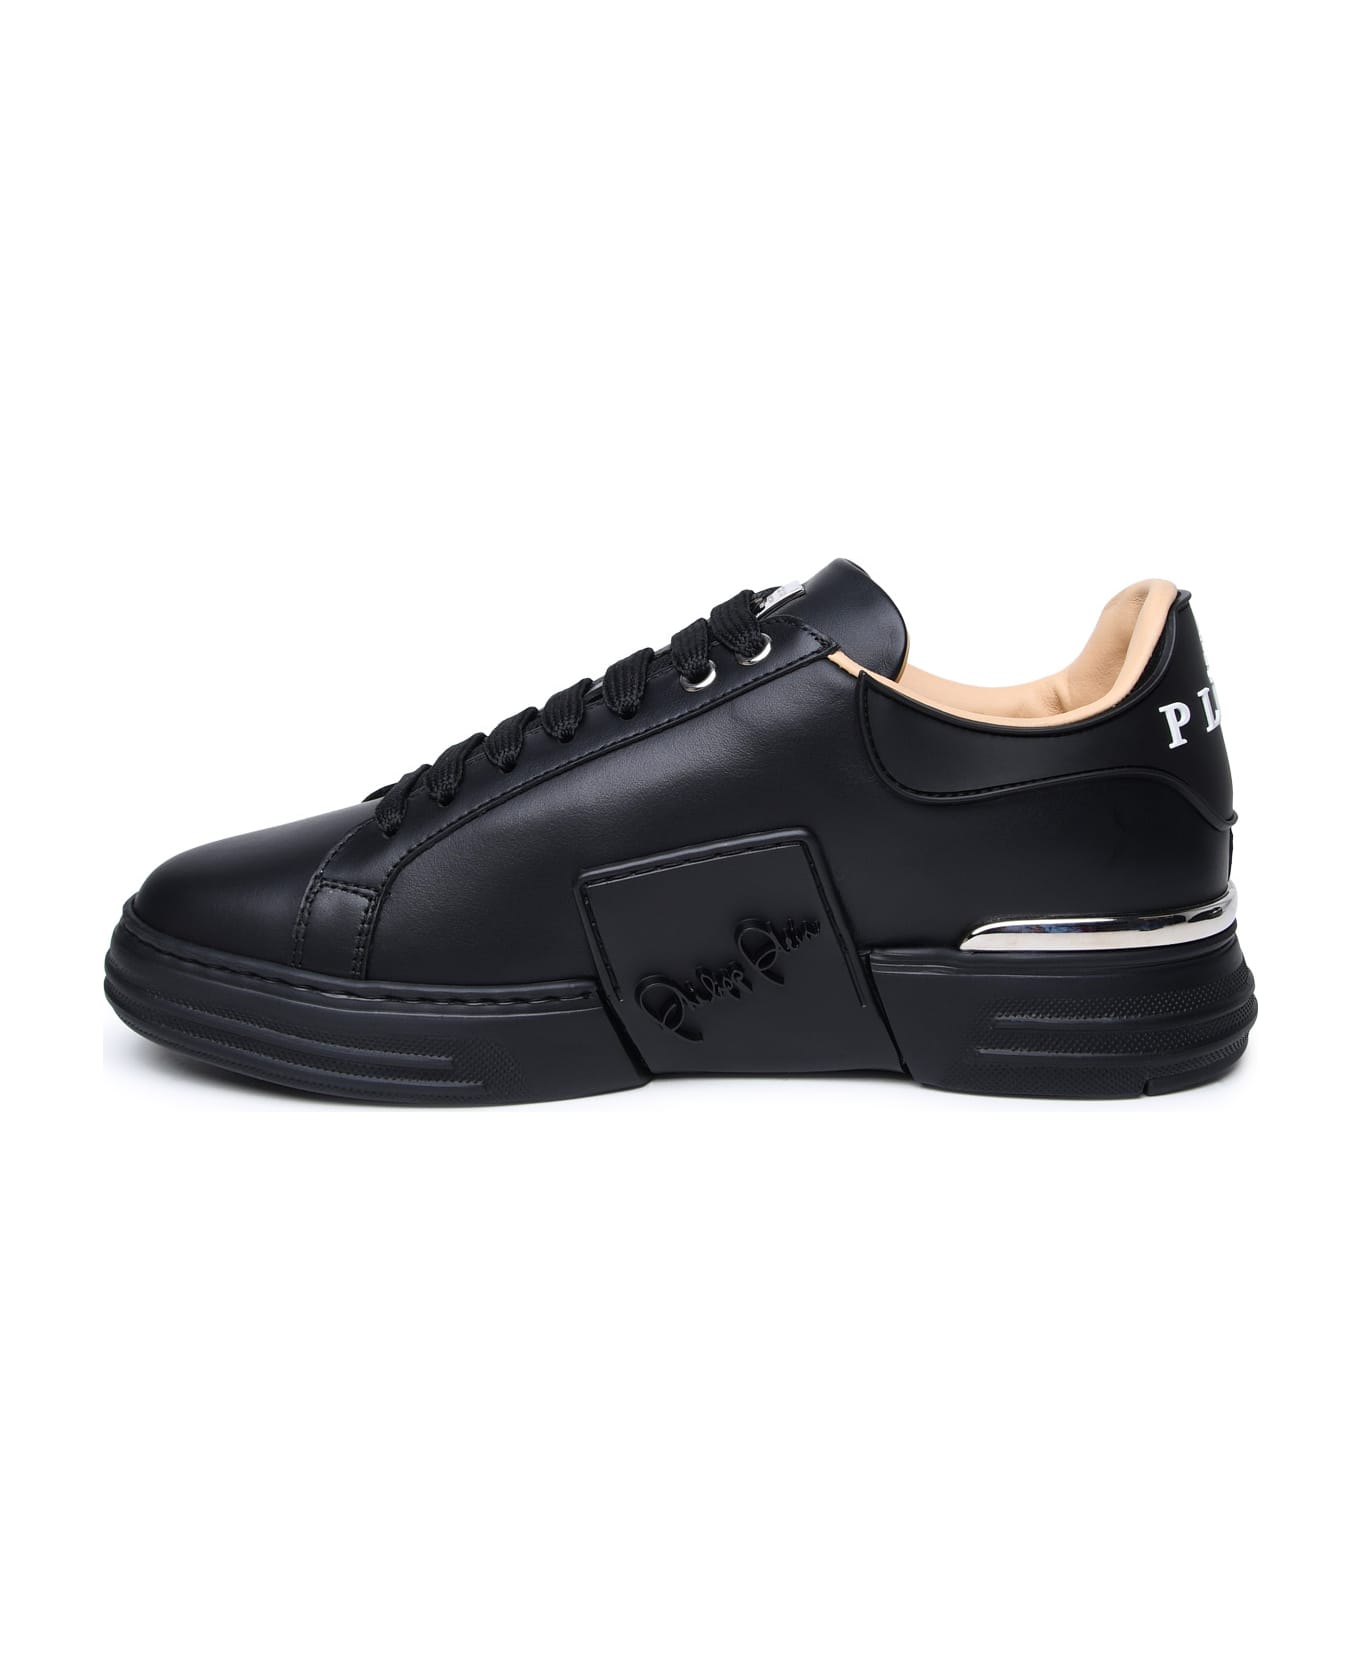 Philipp Plein Exagon Sneakers In Black Nappa Leather - Black